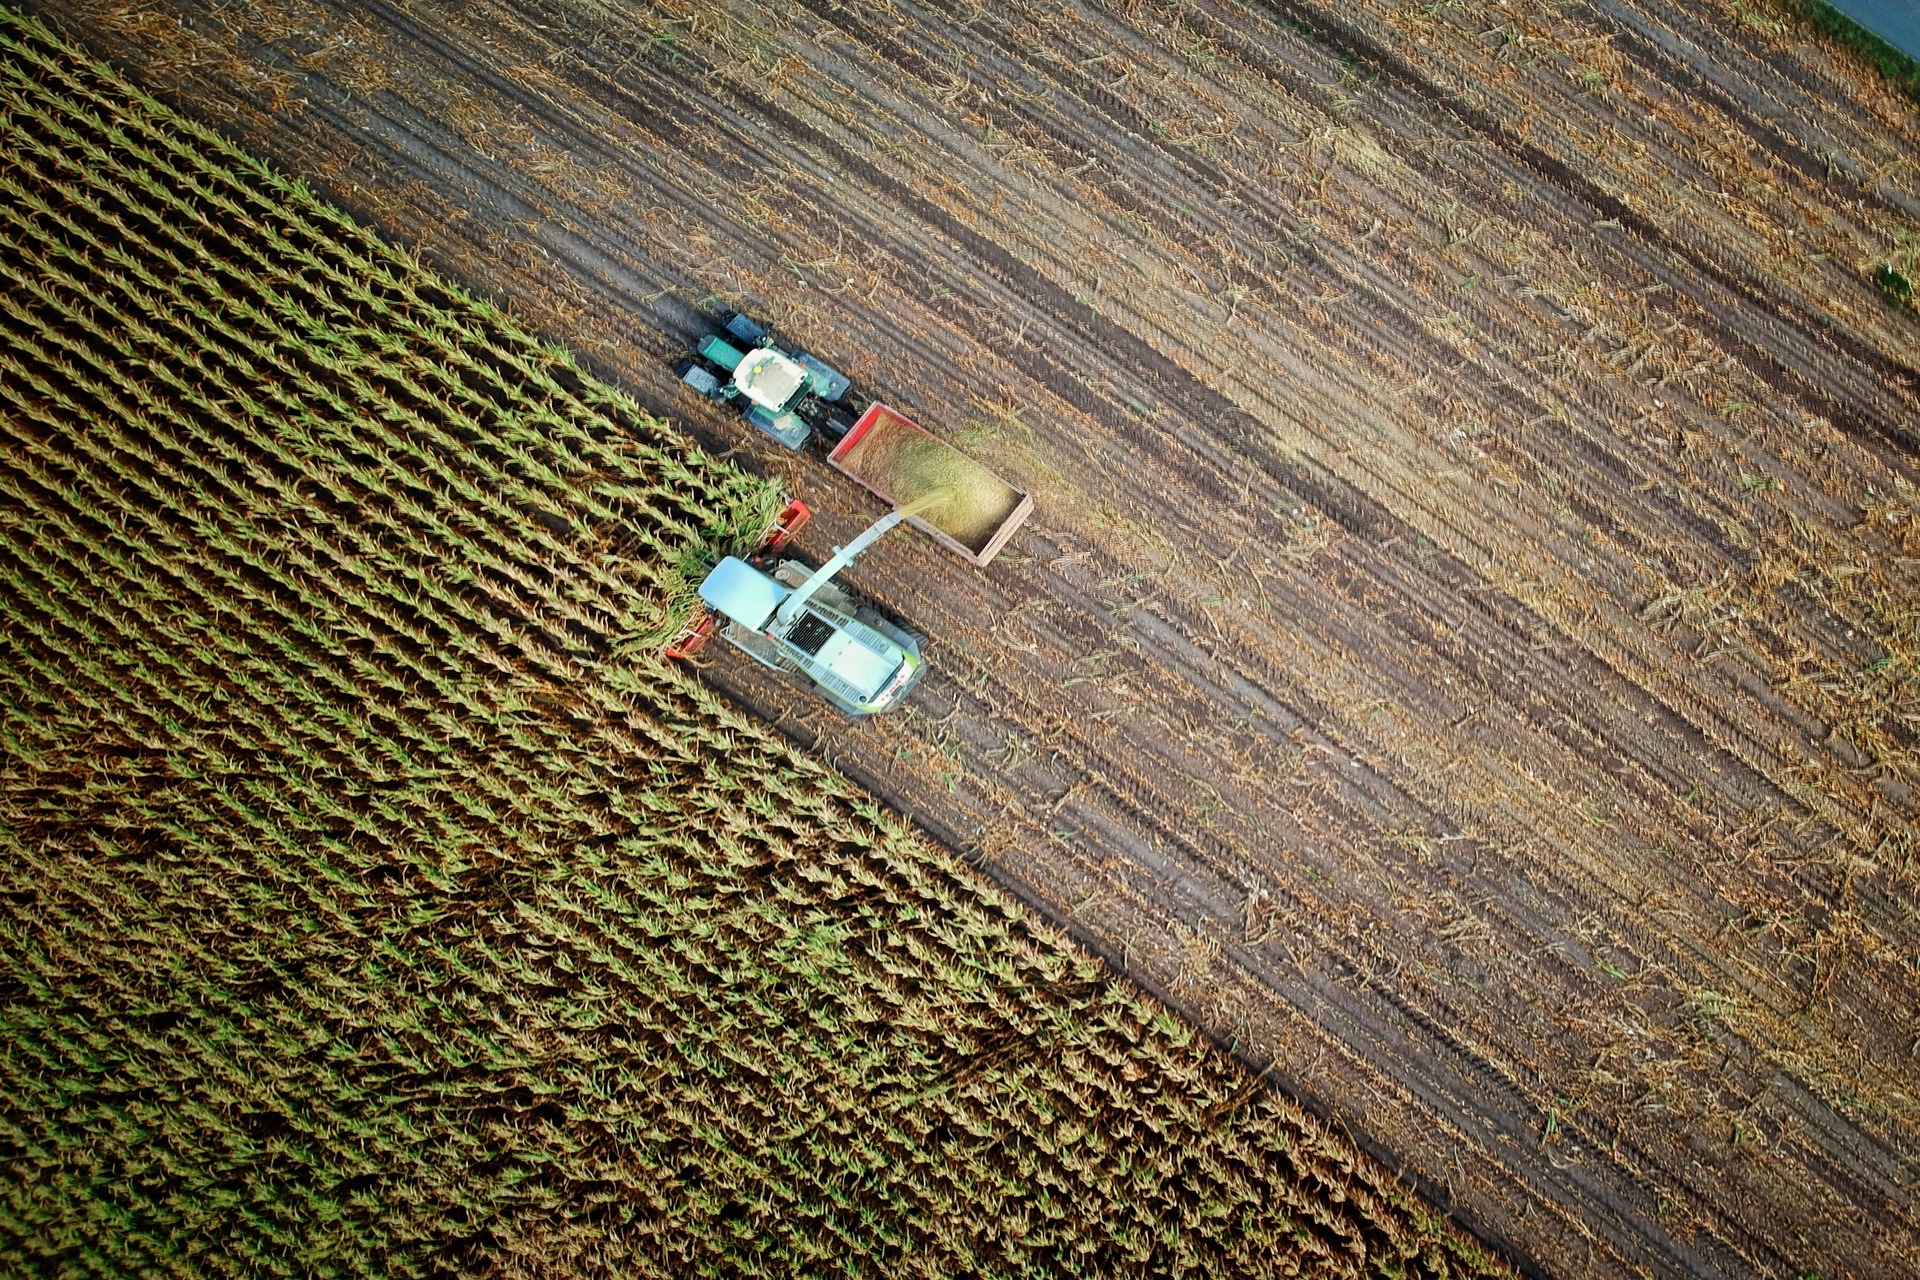 tractor plowing a wide field